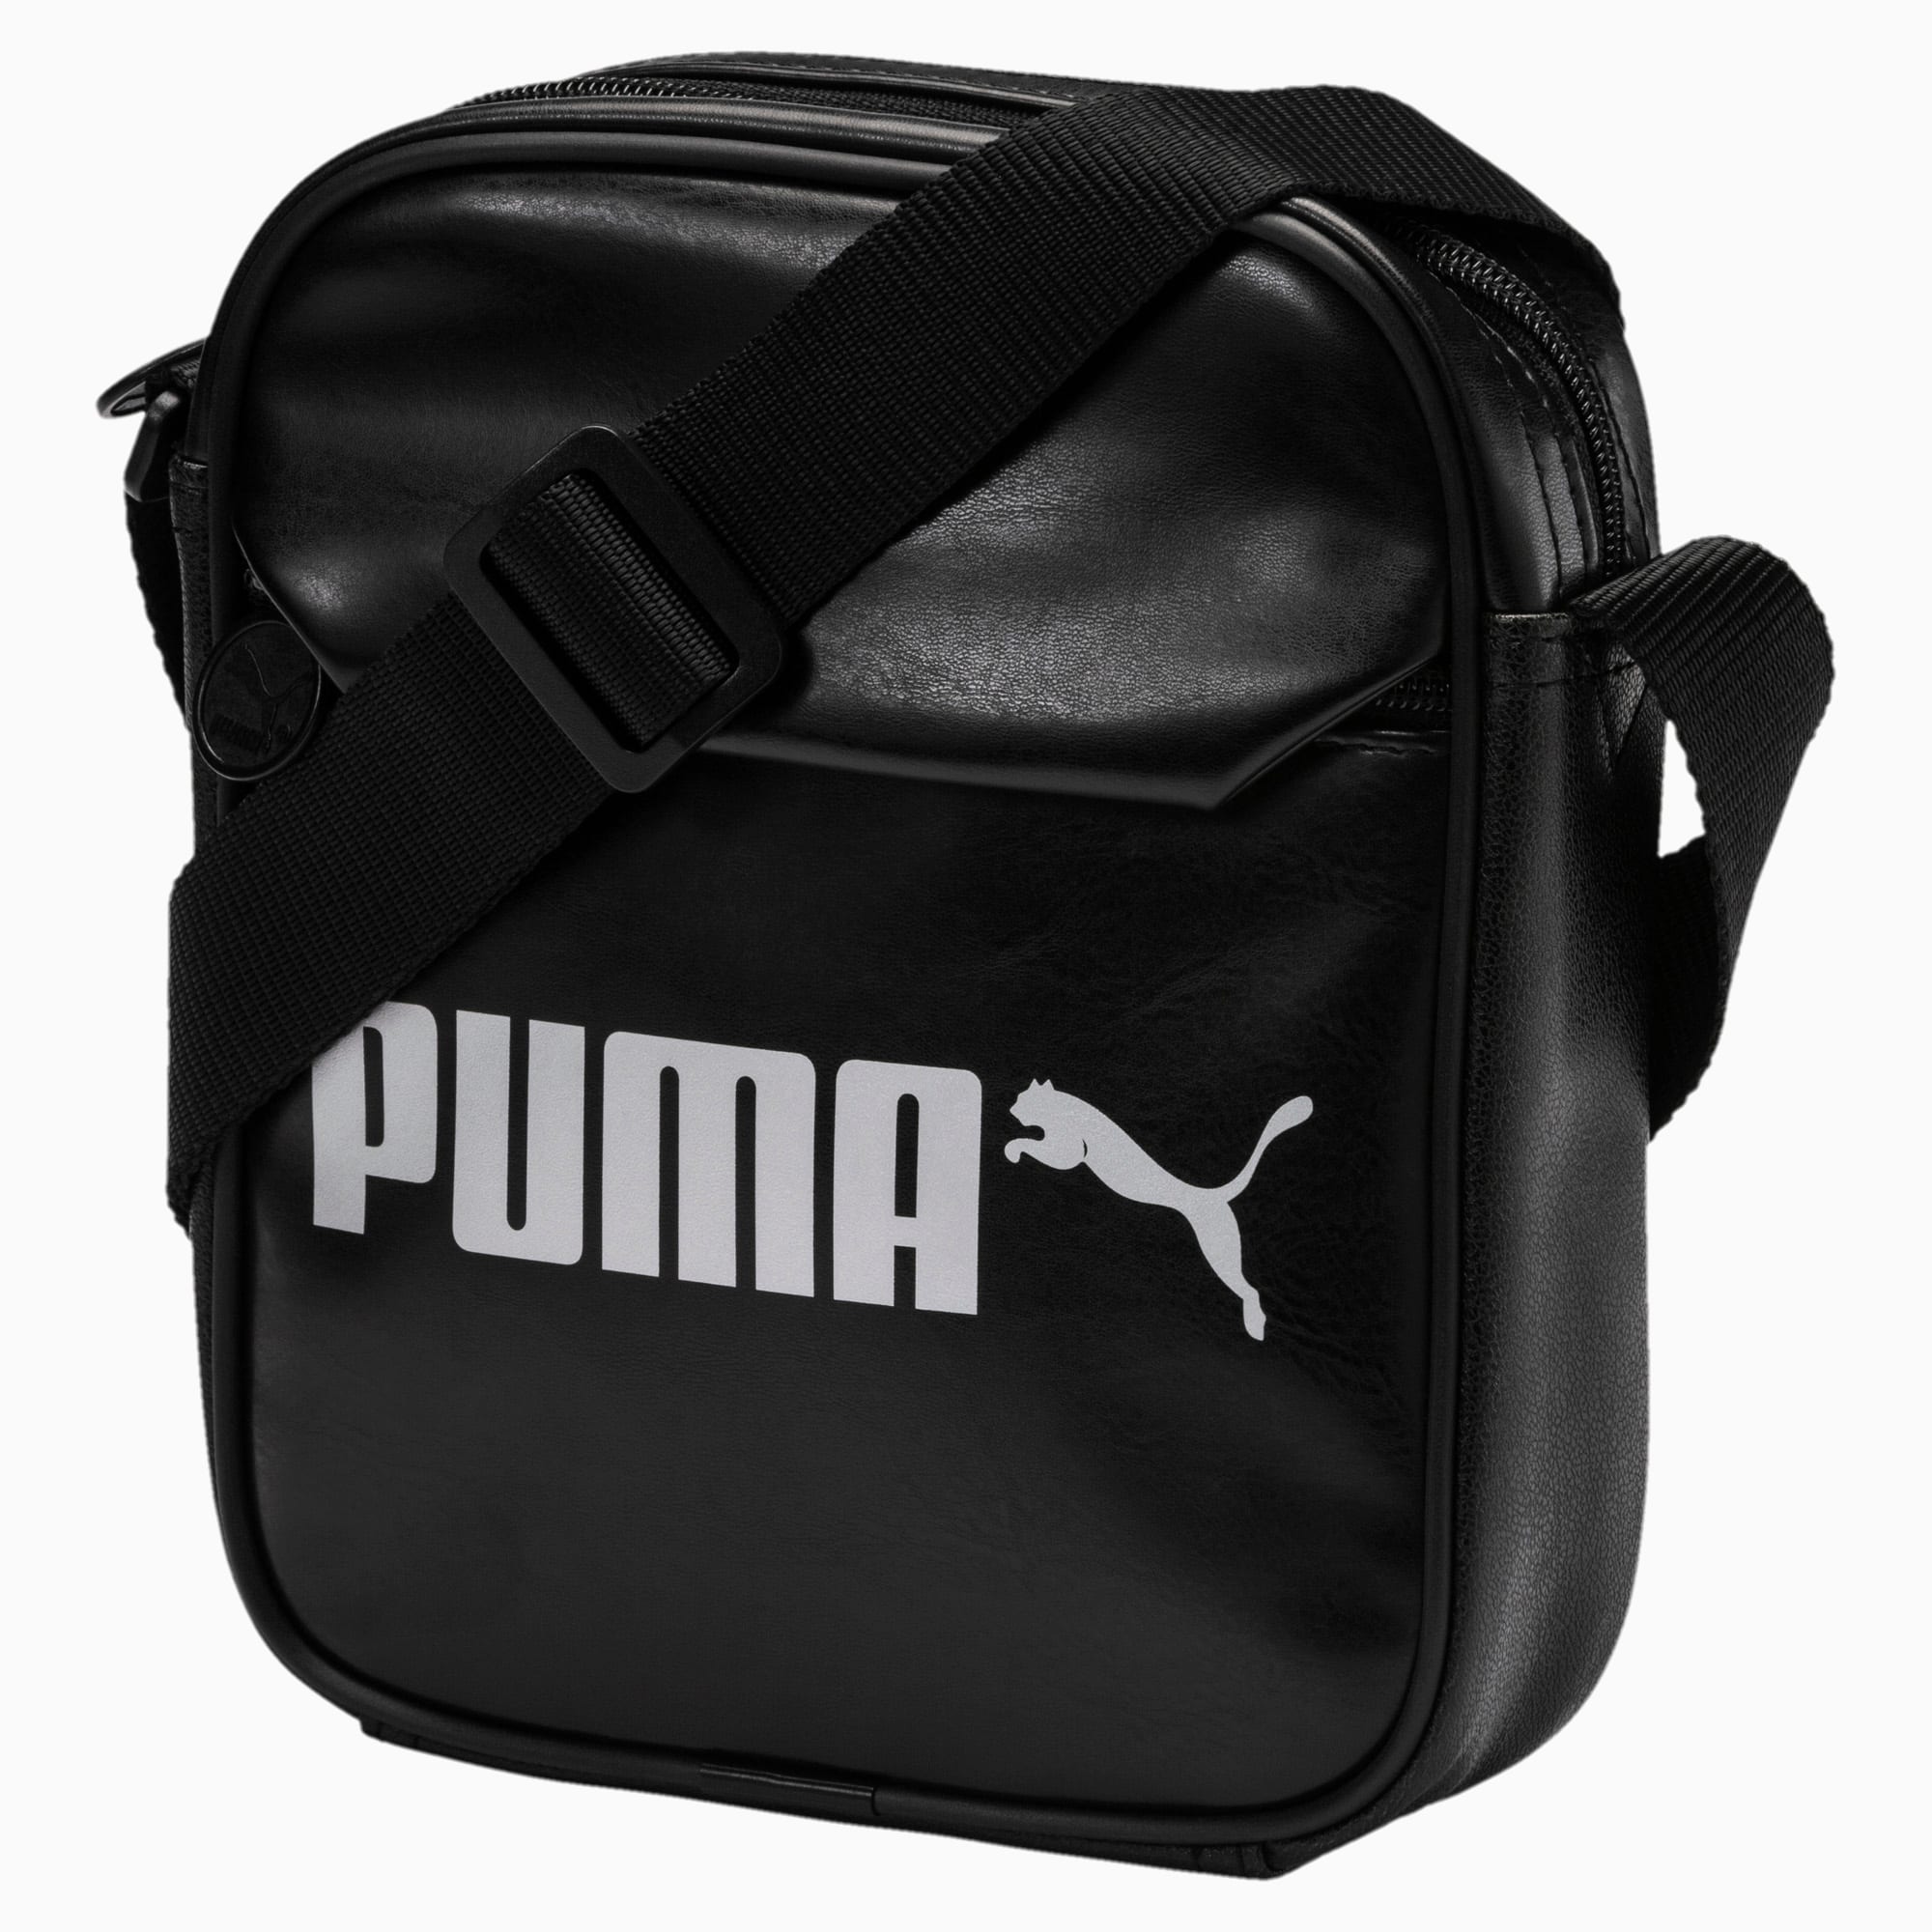 puma black leather bag